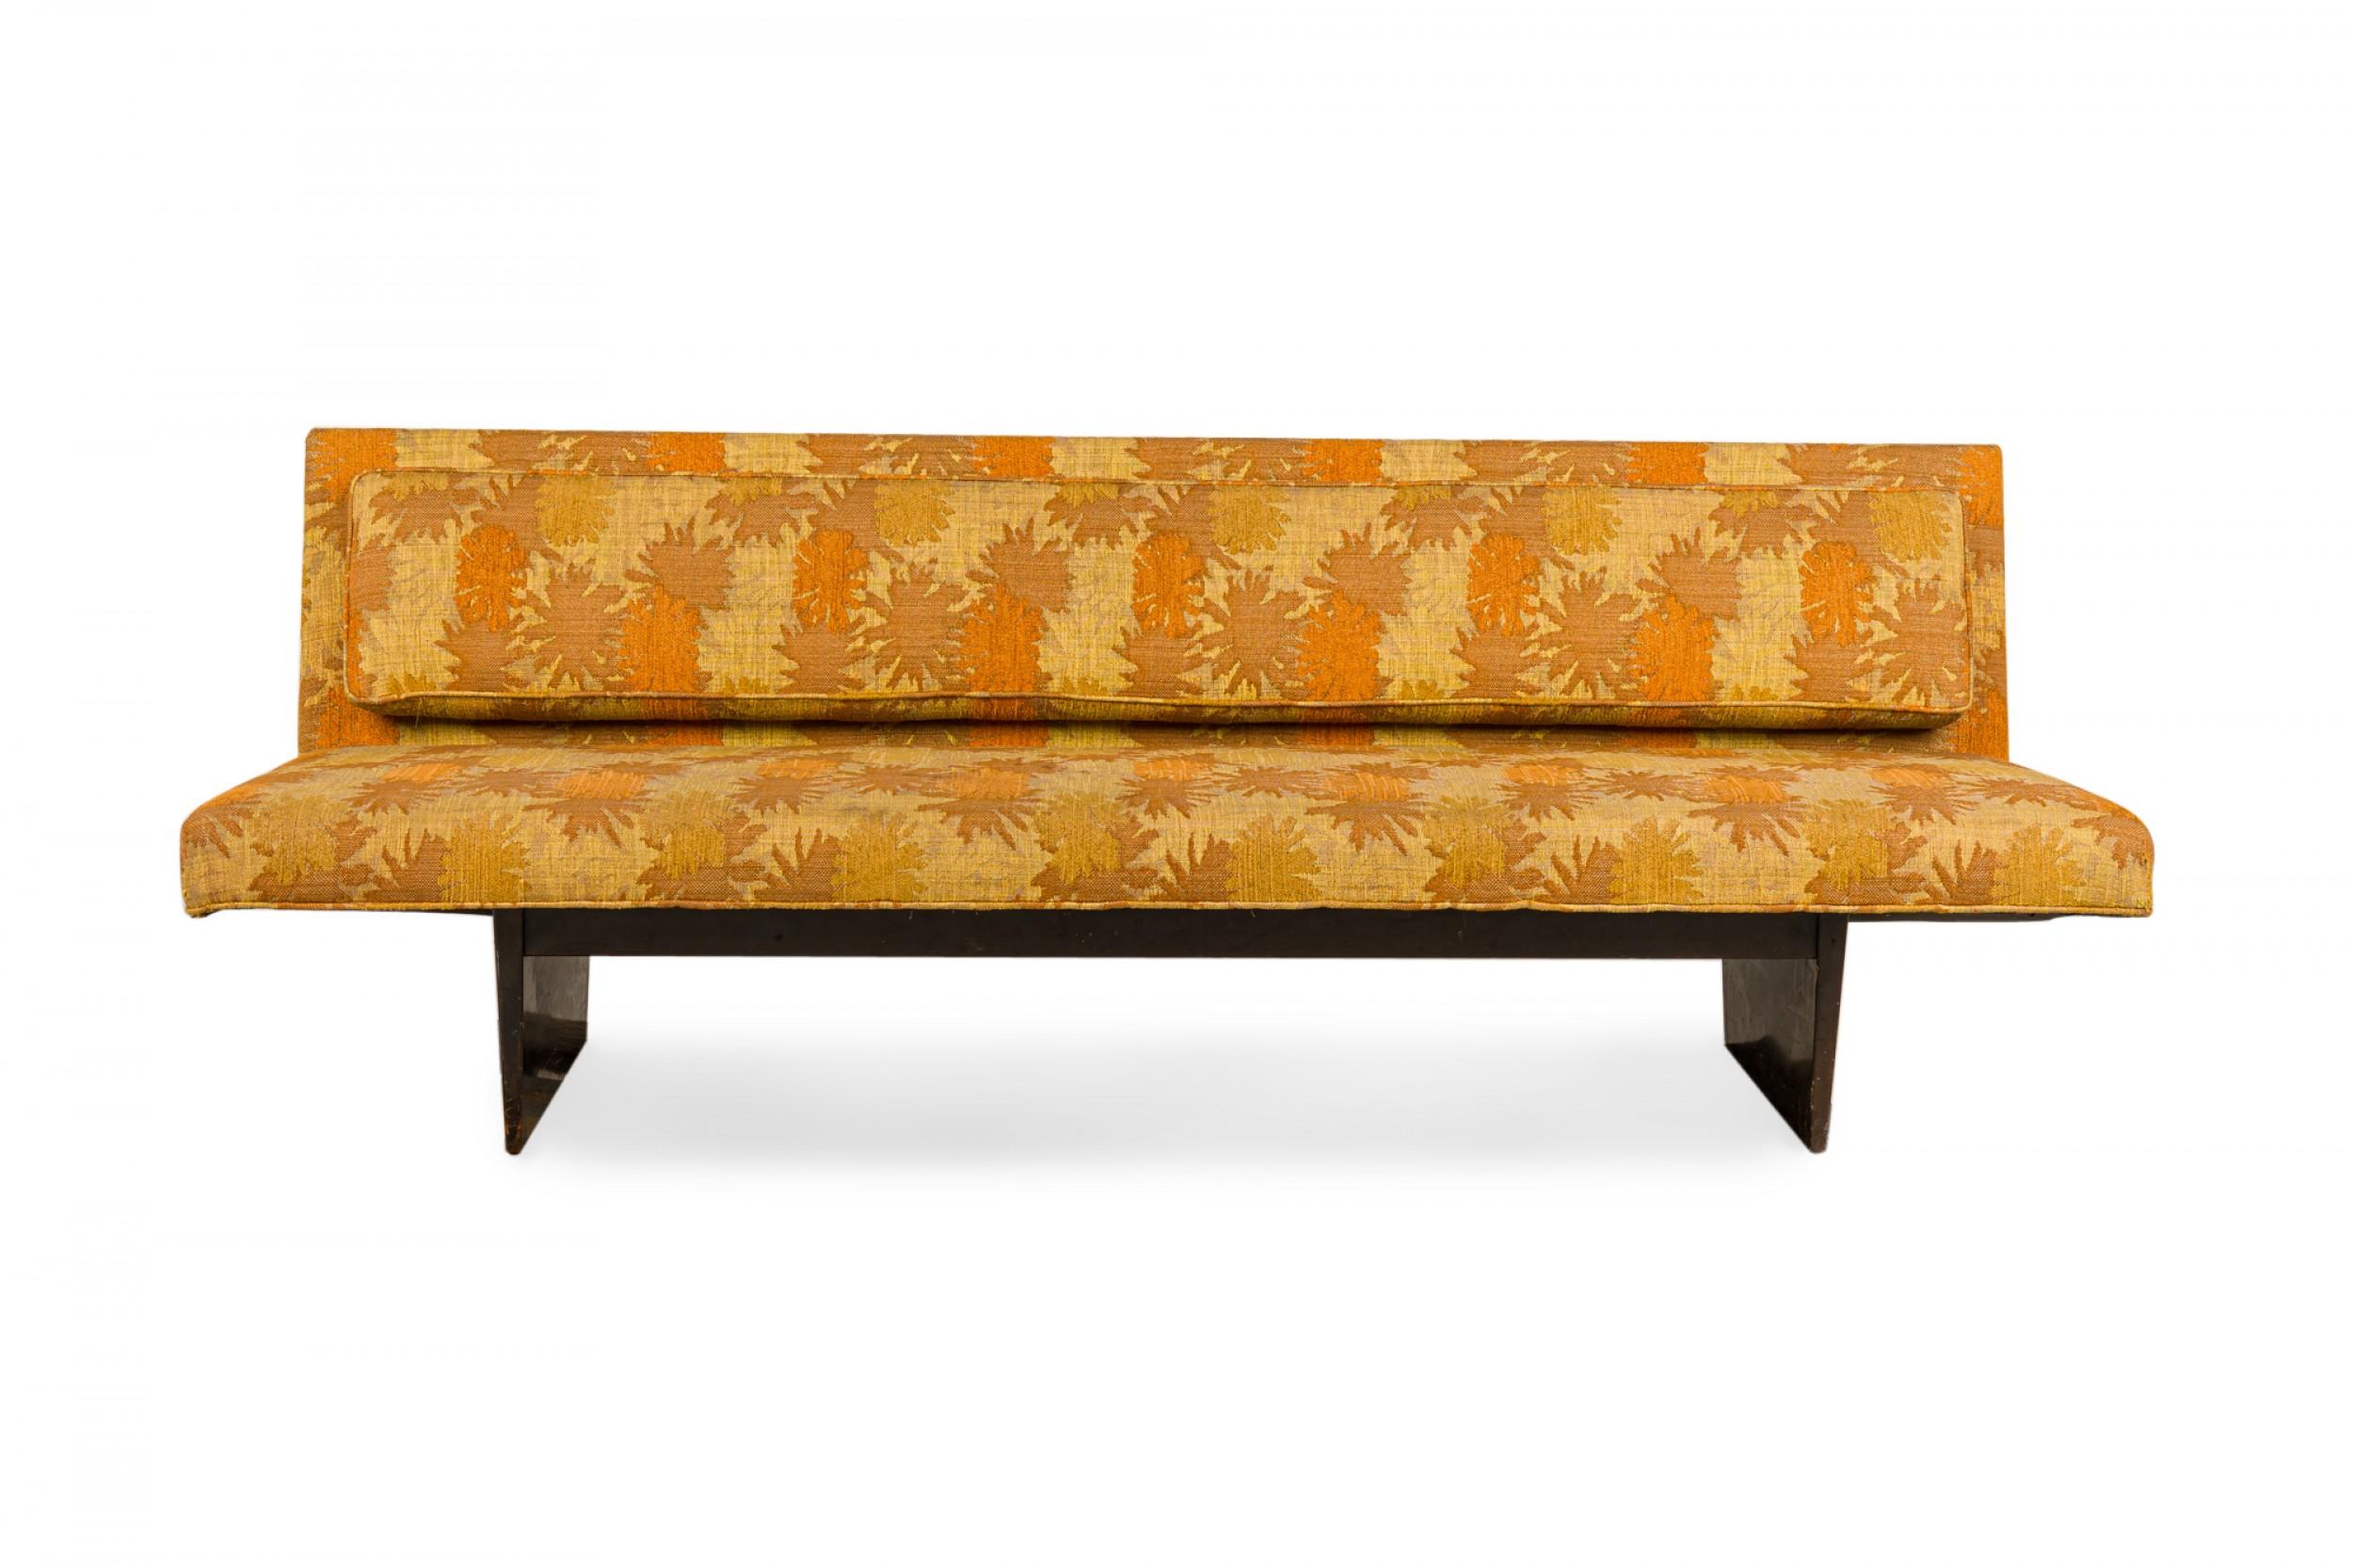 American Mid-Century sofa with orange, yellow, and gold sunburst patterned upholstery, resting on an ebonized wooden sled base. (HARVEY PROBBER).
 